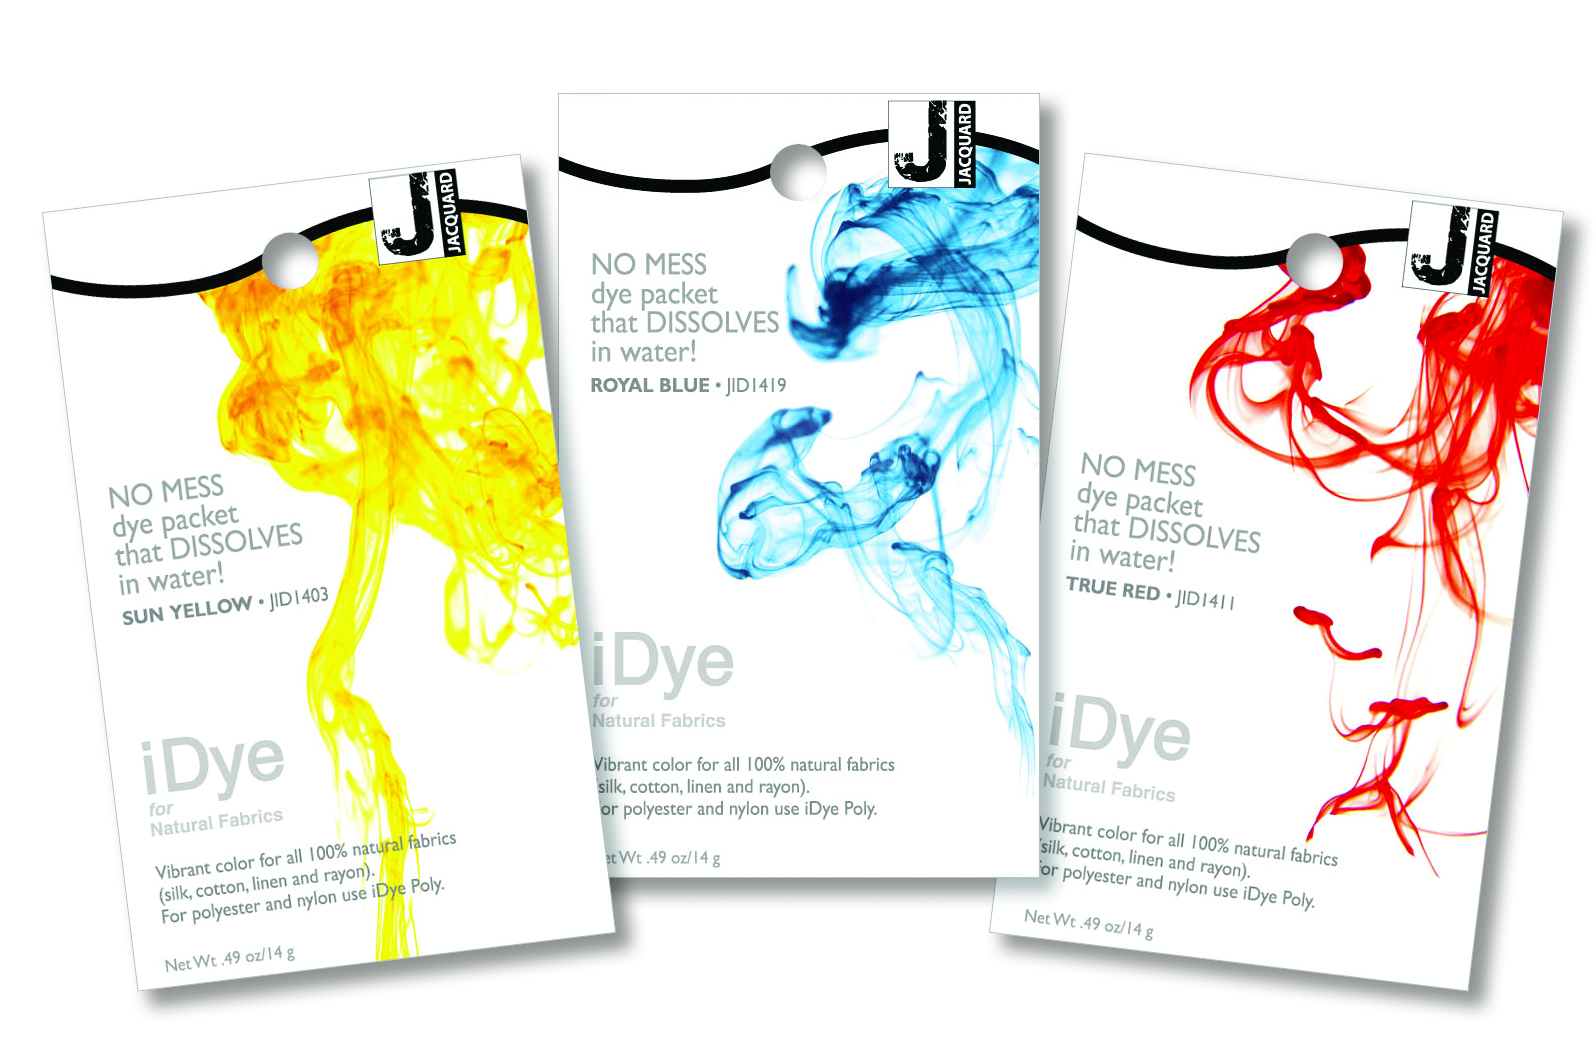 iDye for Natural Fabrics